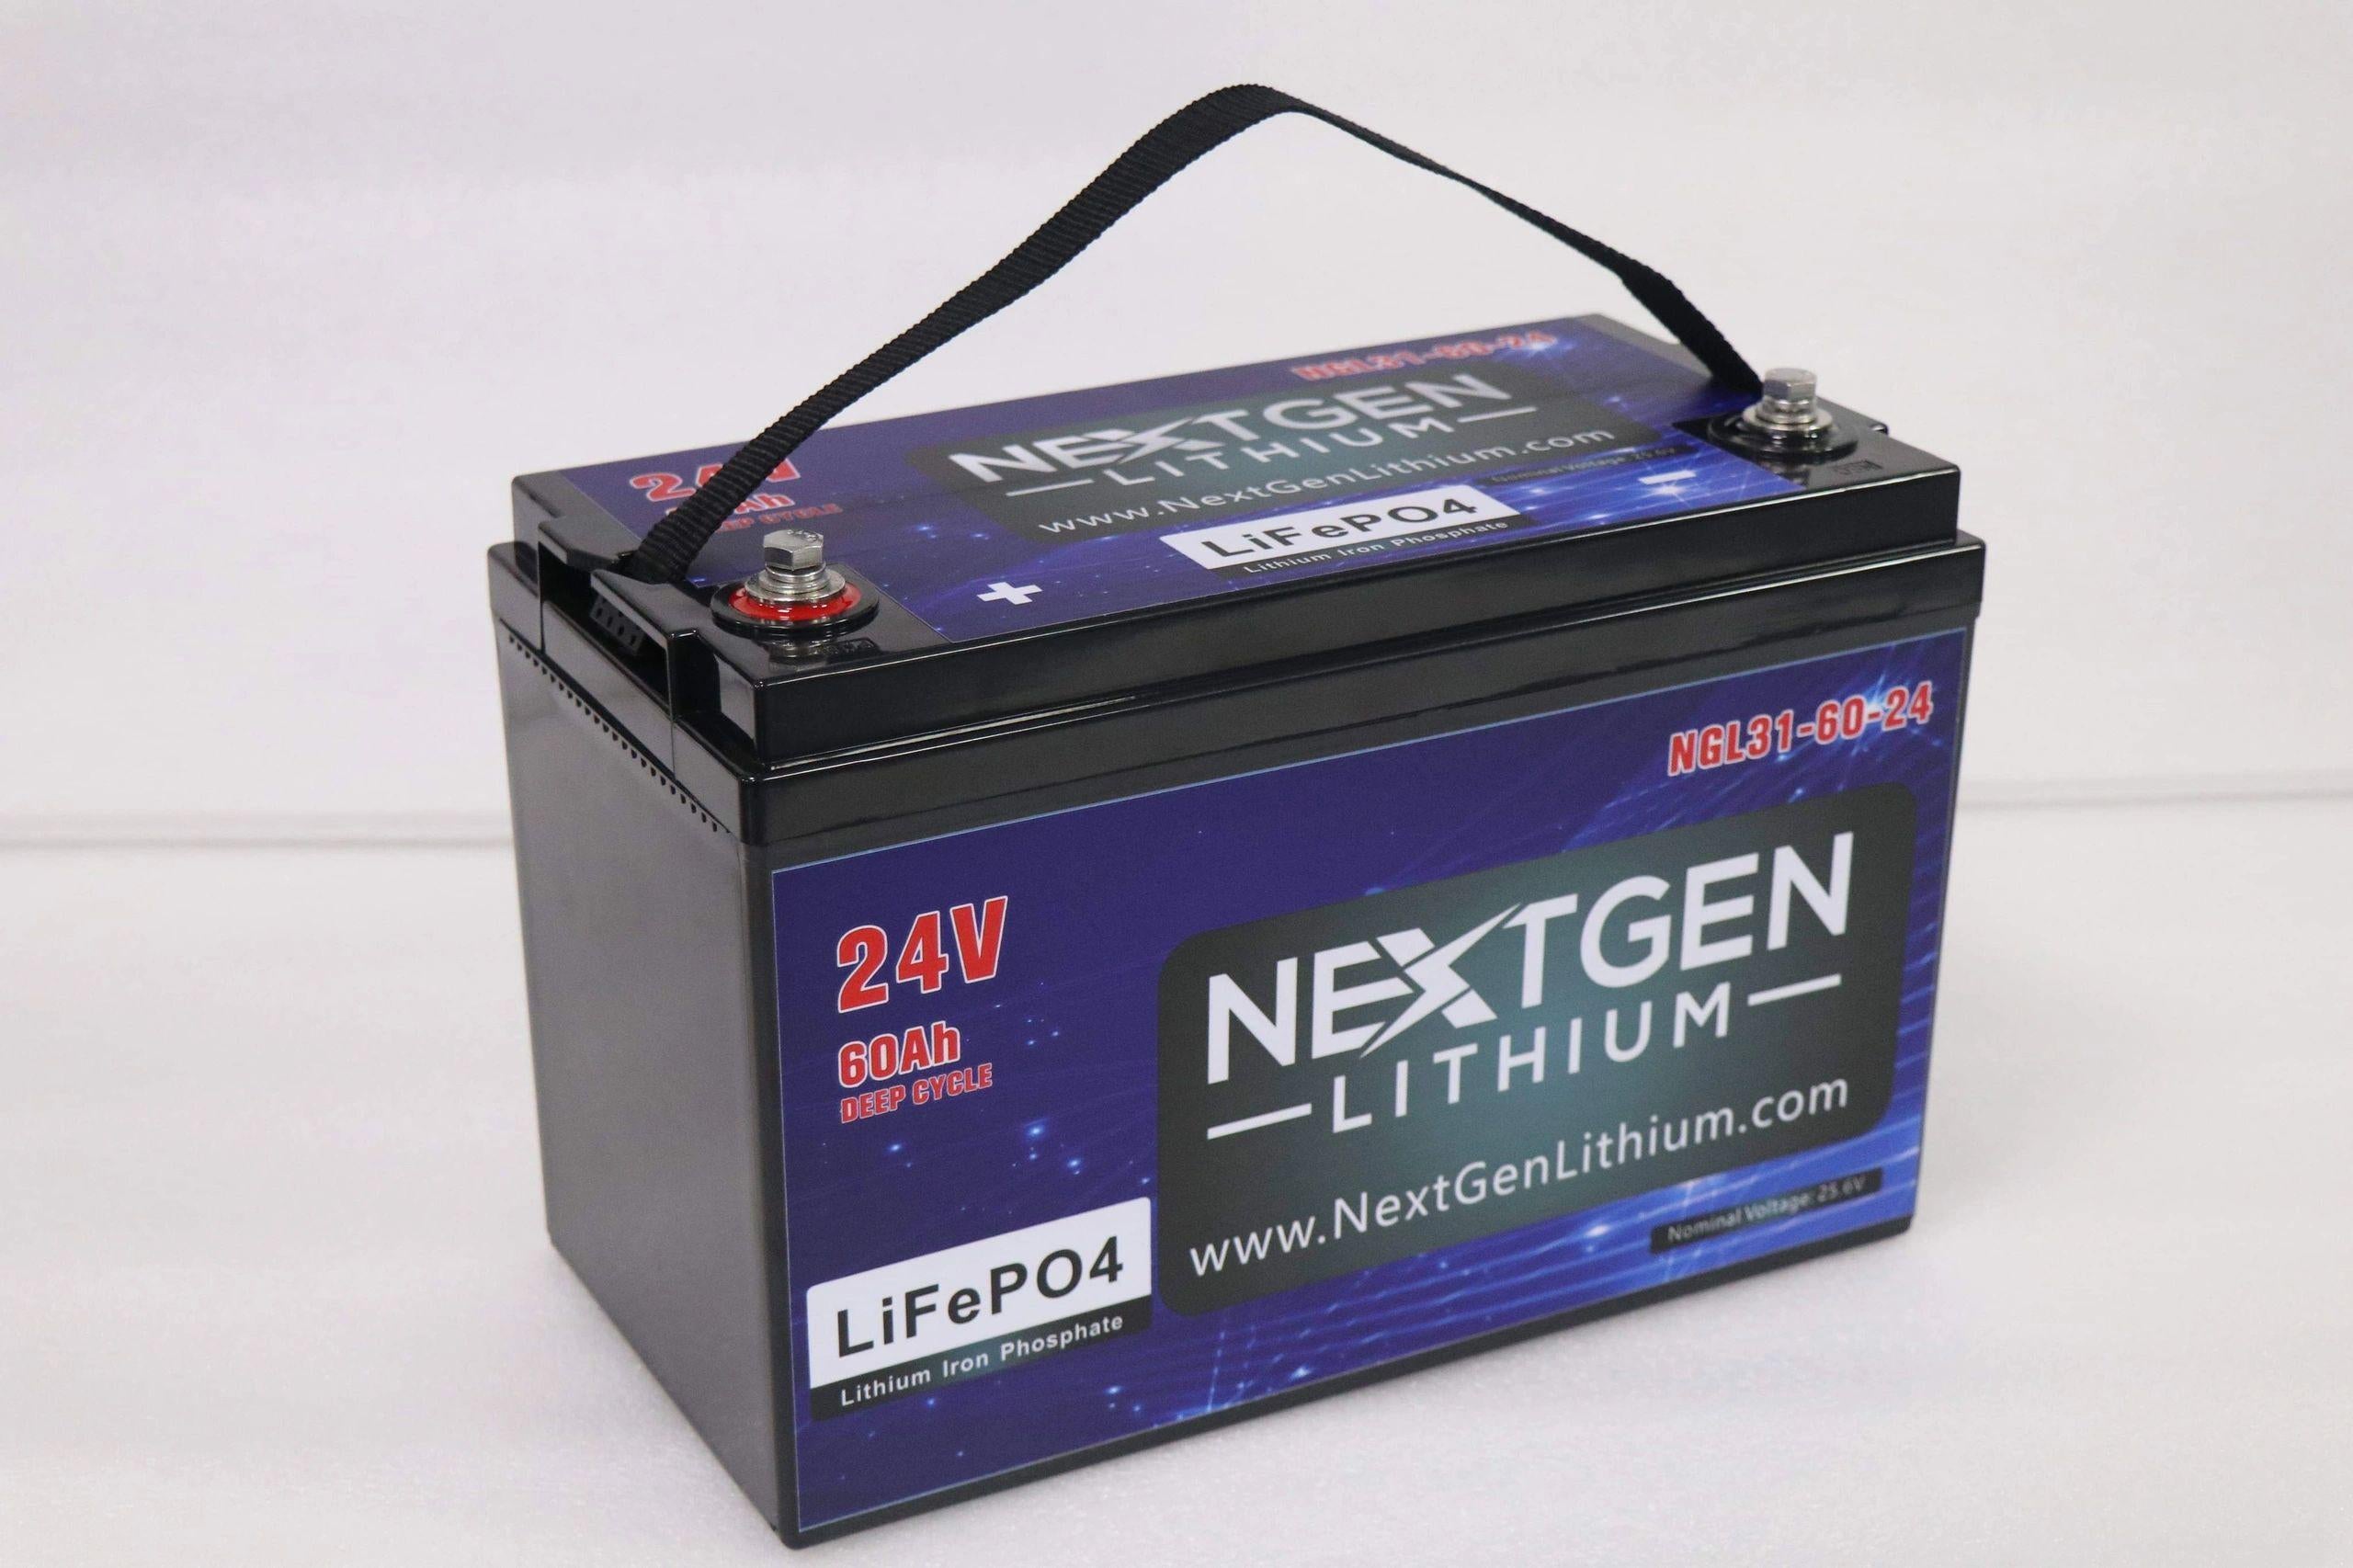 Next Gen Lithium 24v 60ah Trolling Motor Battery Kit Including Stealth Onboard Charging System